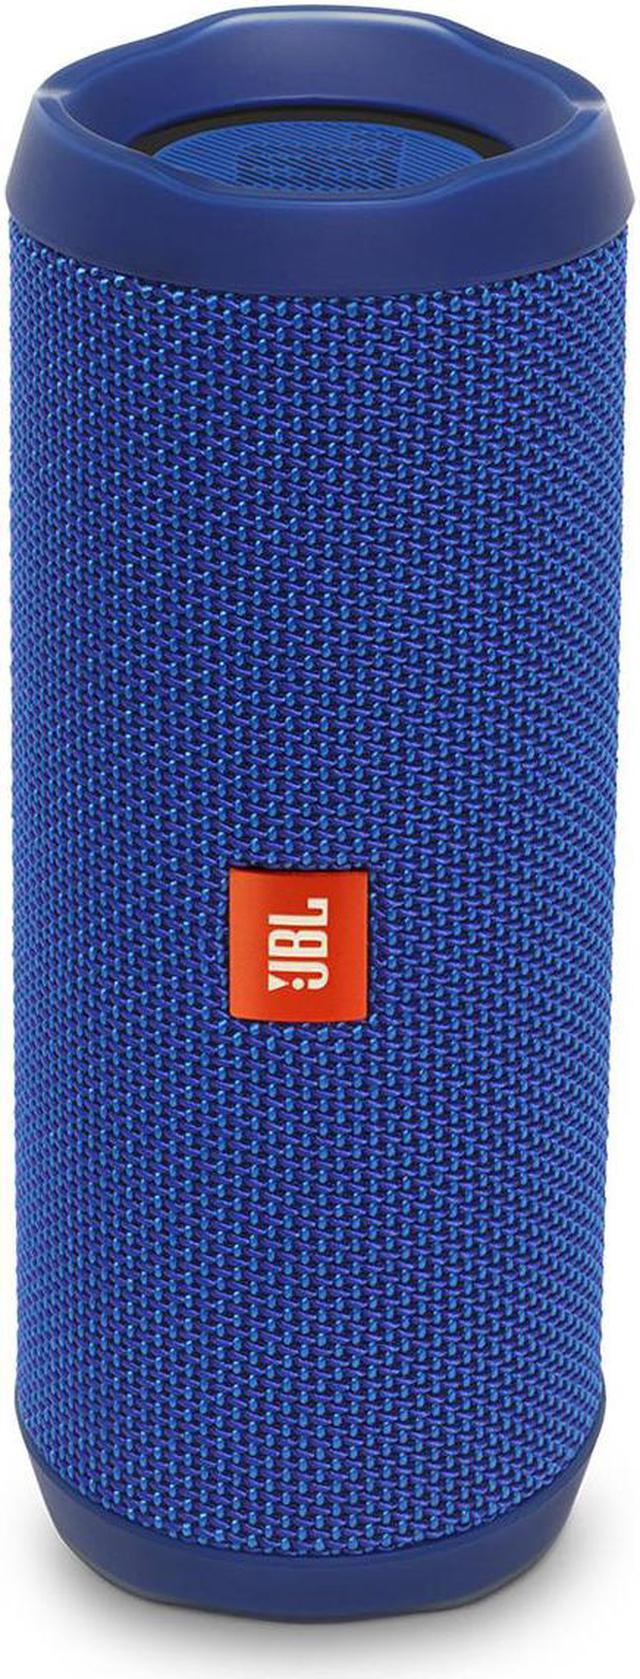 Geboorte geven jazz milieu JBL Flip 4 Portable Waterproof Bluetooth Speaker (Blue) - Newegg.com